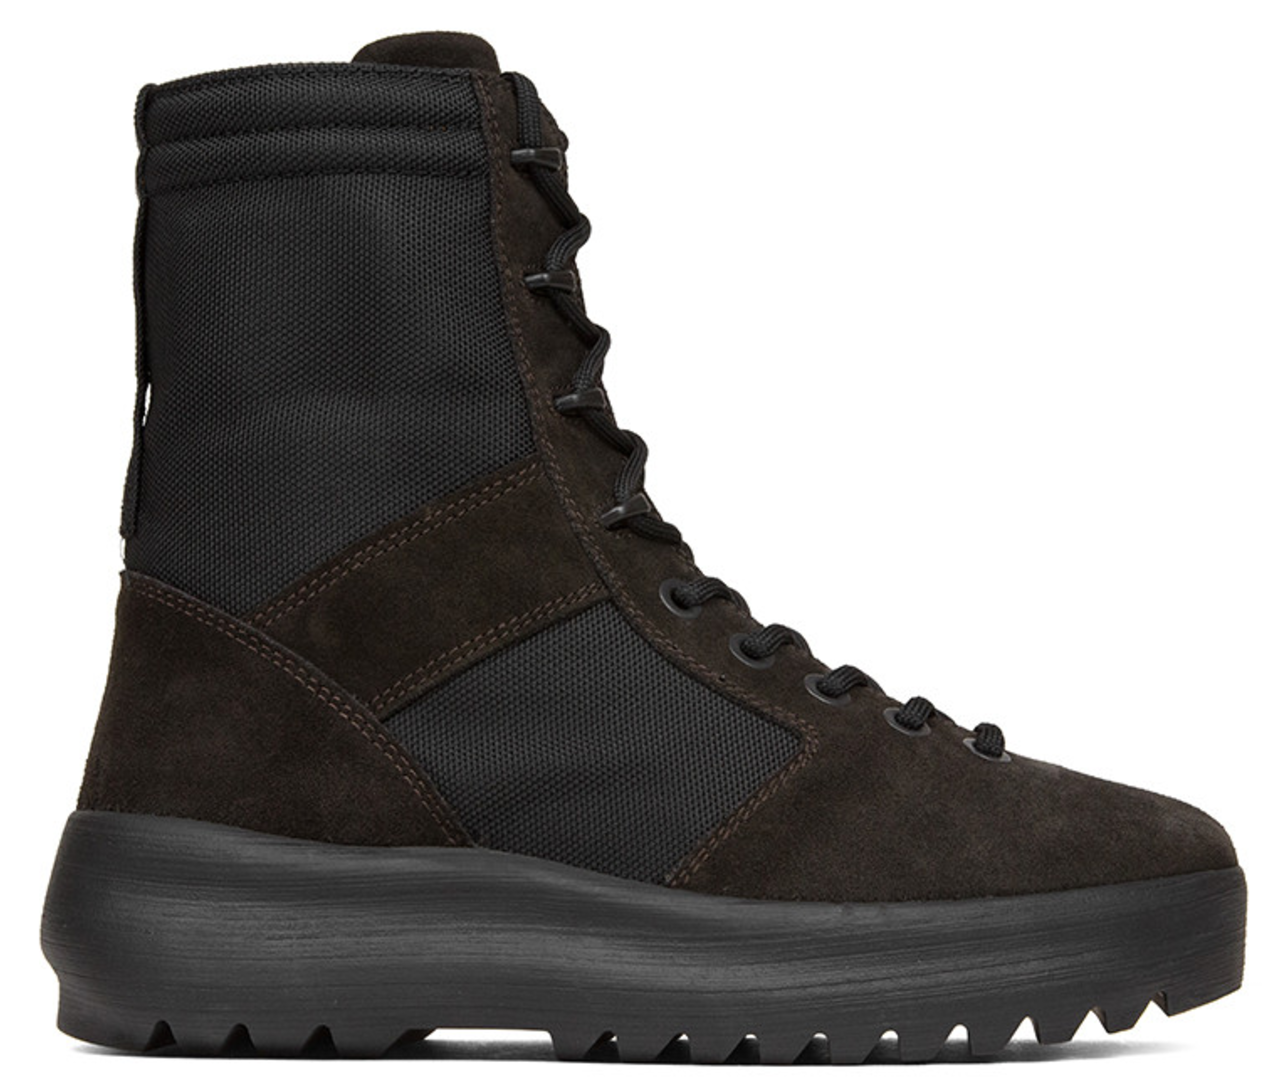 Yeezy Season 3 Military Boot Onyx Shade sneakers